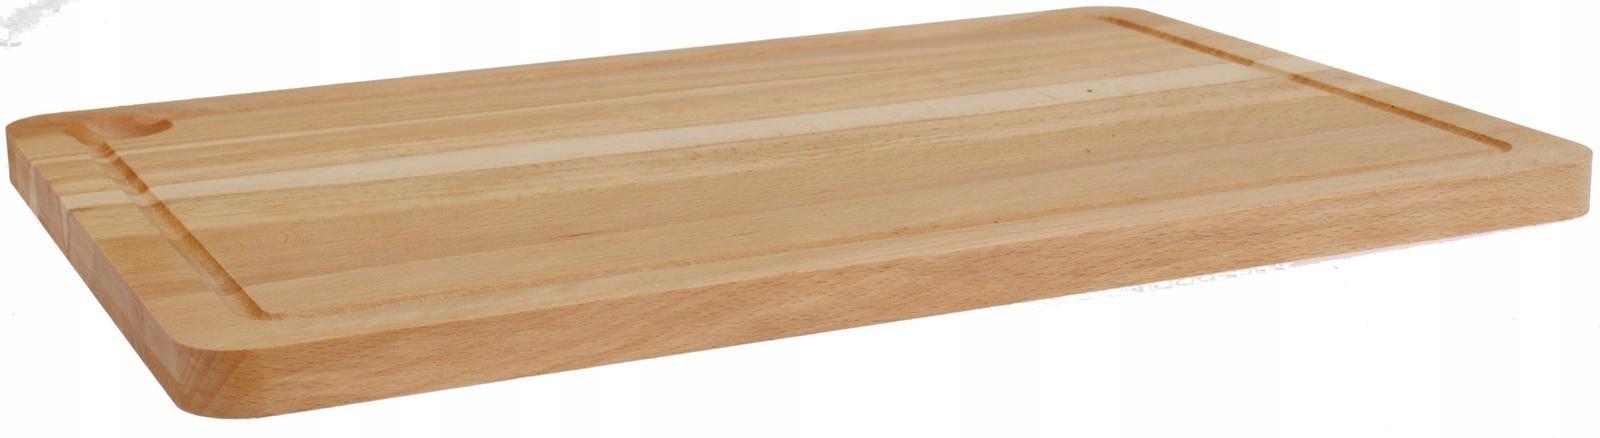 Deska do krojenia 30x2x45 cm drewniana naturalny buk nr. 3